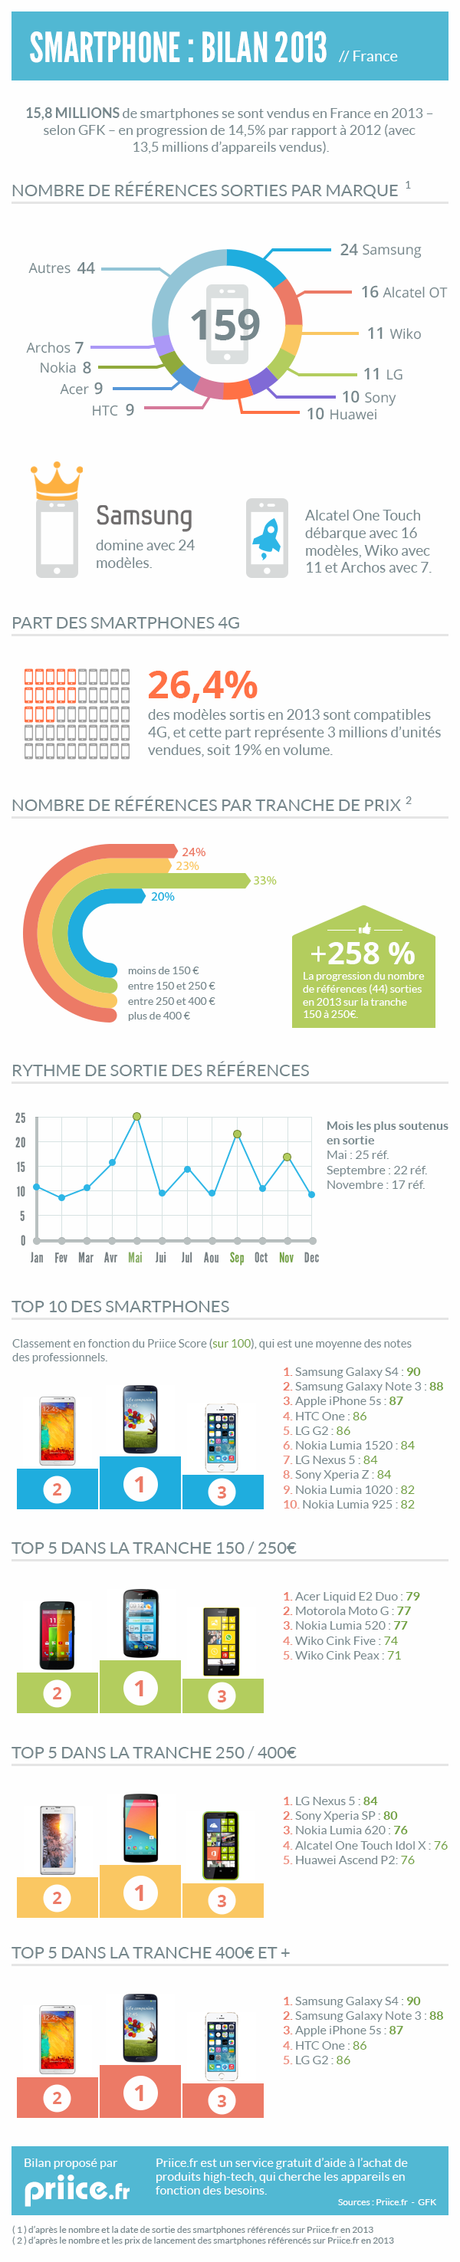 infographie-bilan-smartphone-2013-priice